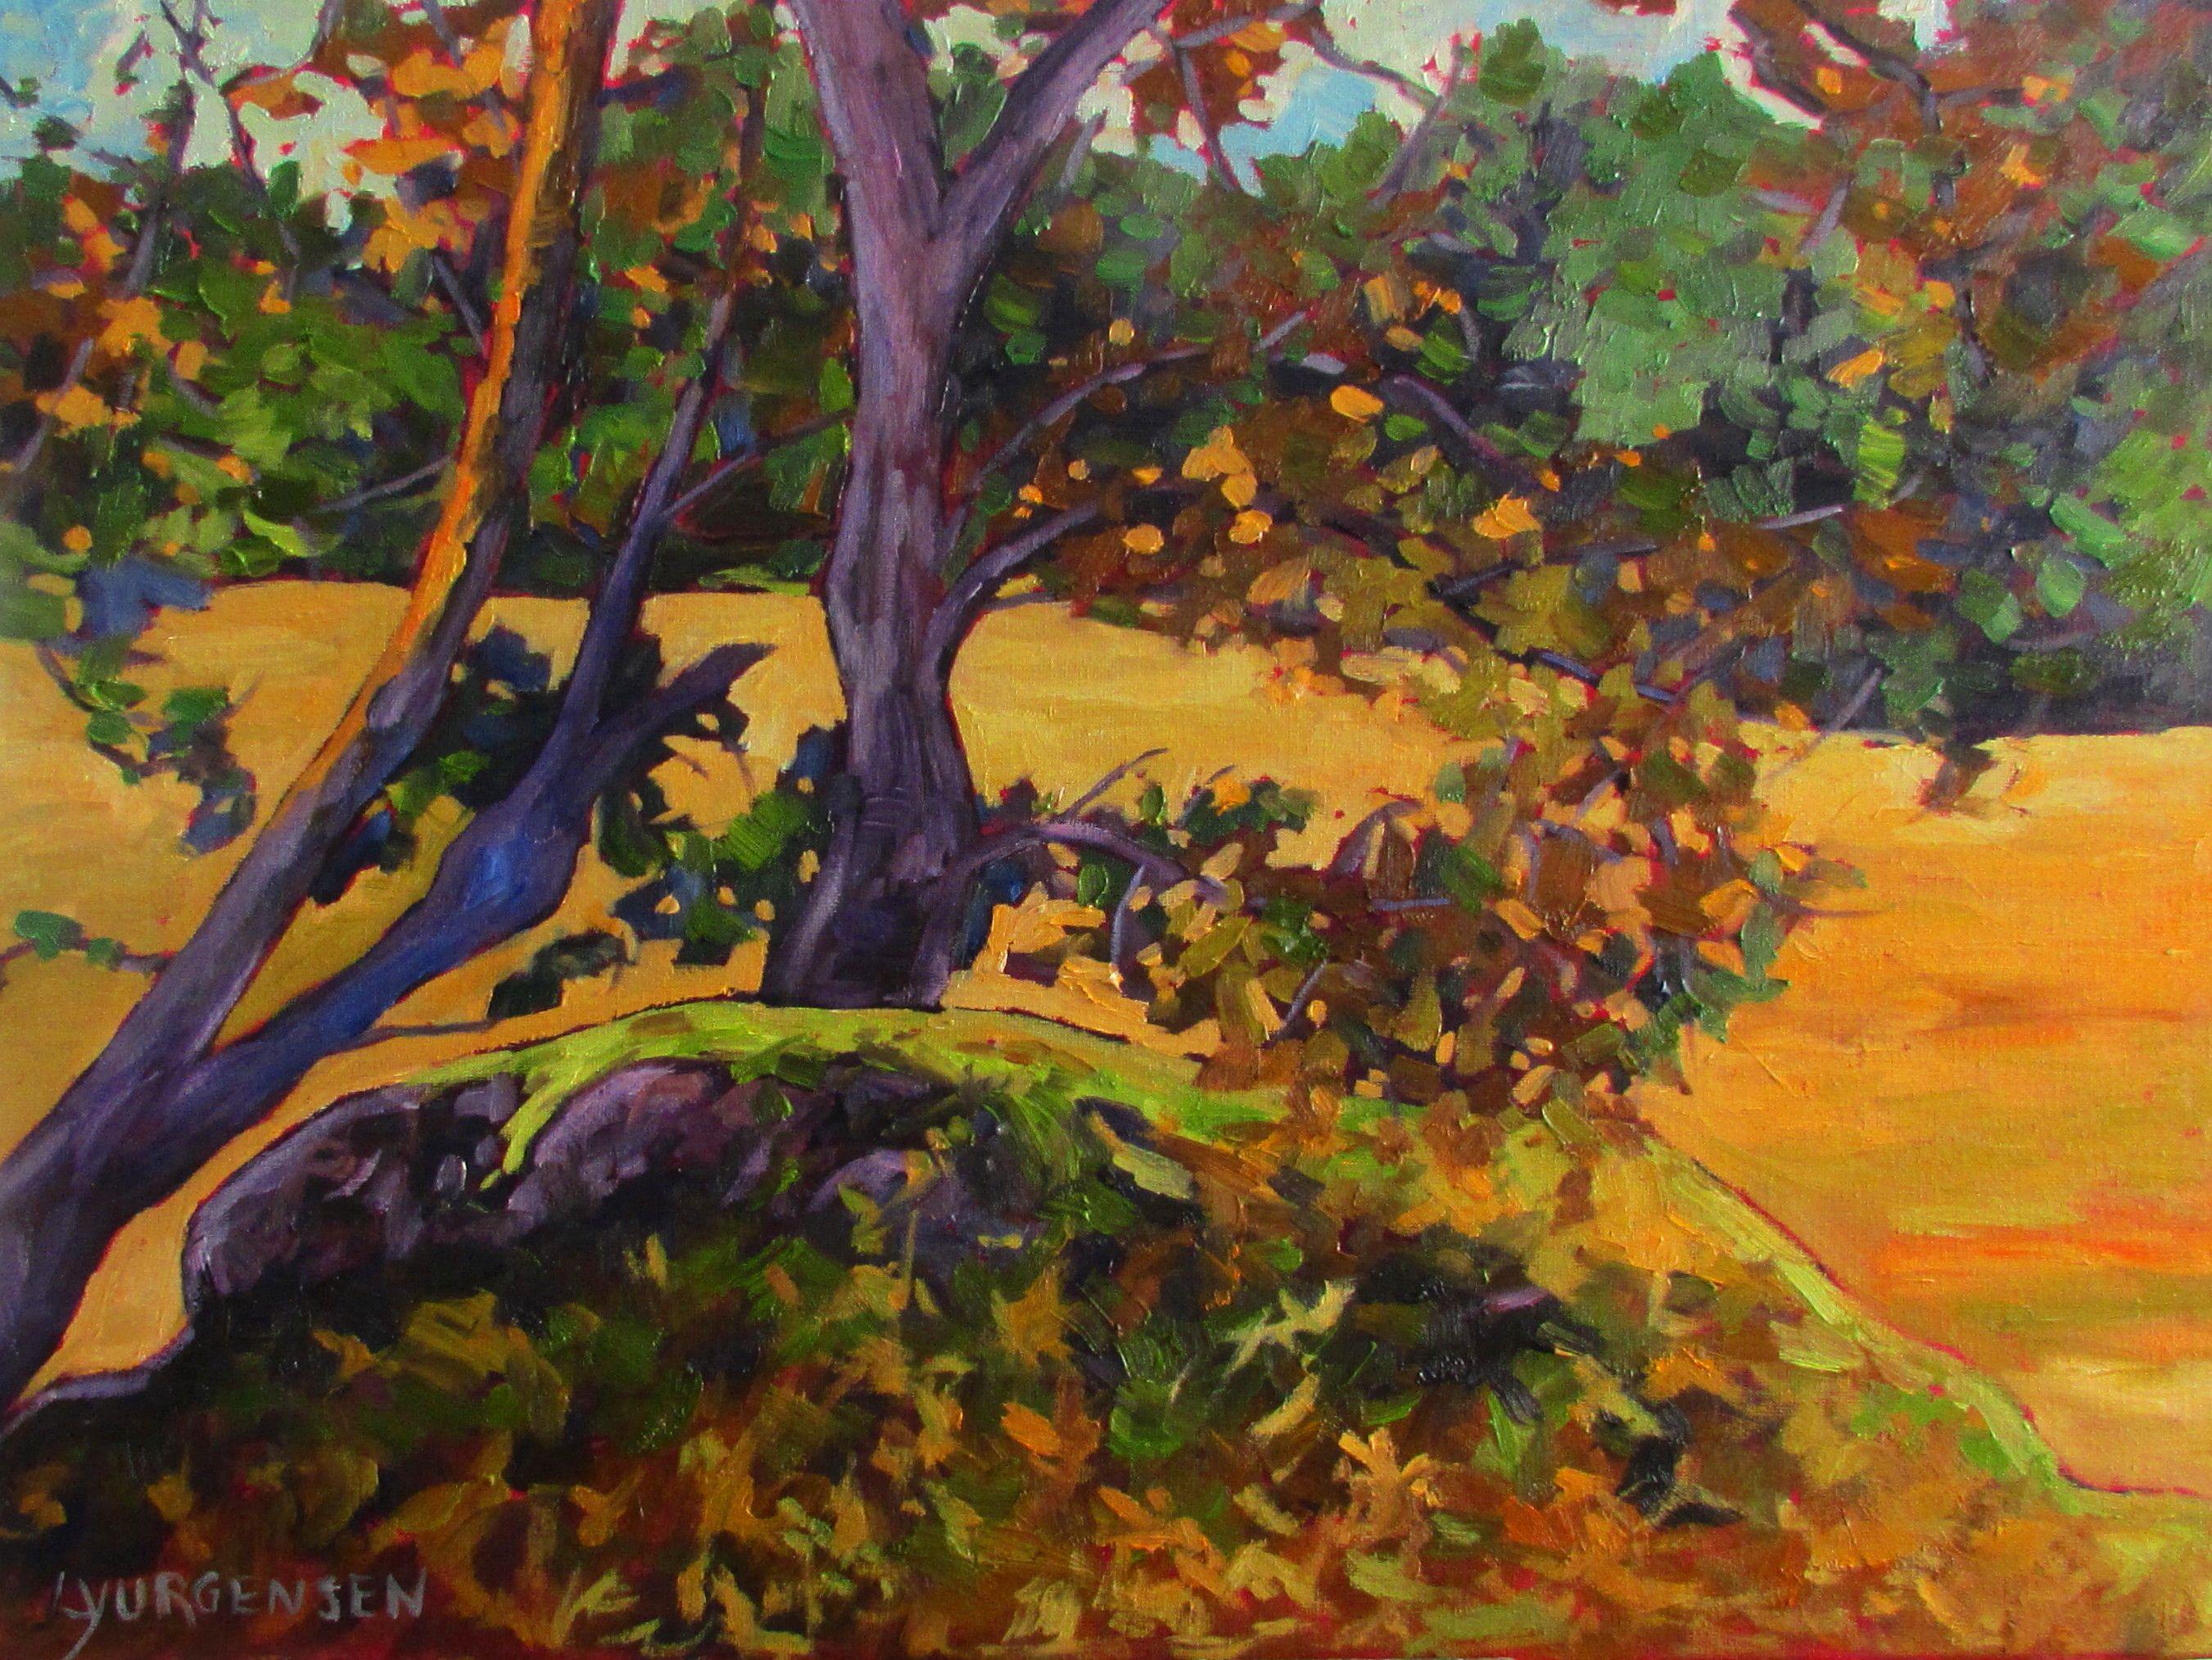 Linda Yurgensen Landscape Painting - Chemainus Field, Painting, Oil on Canvas